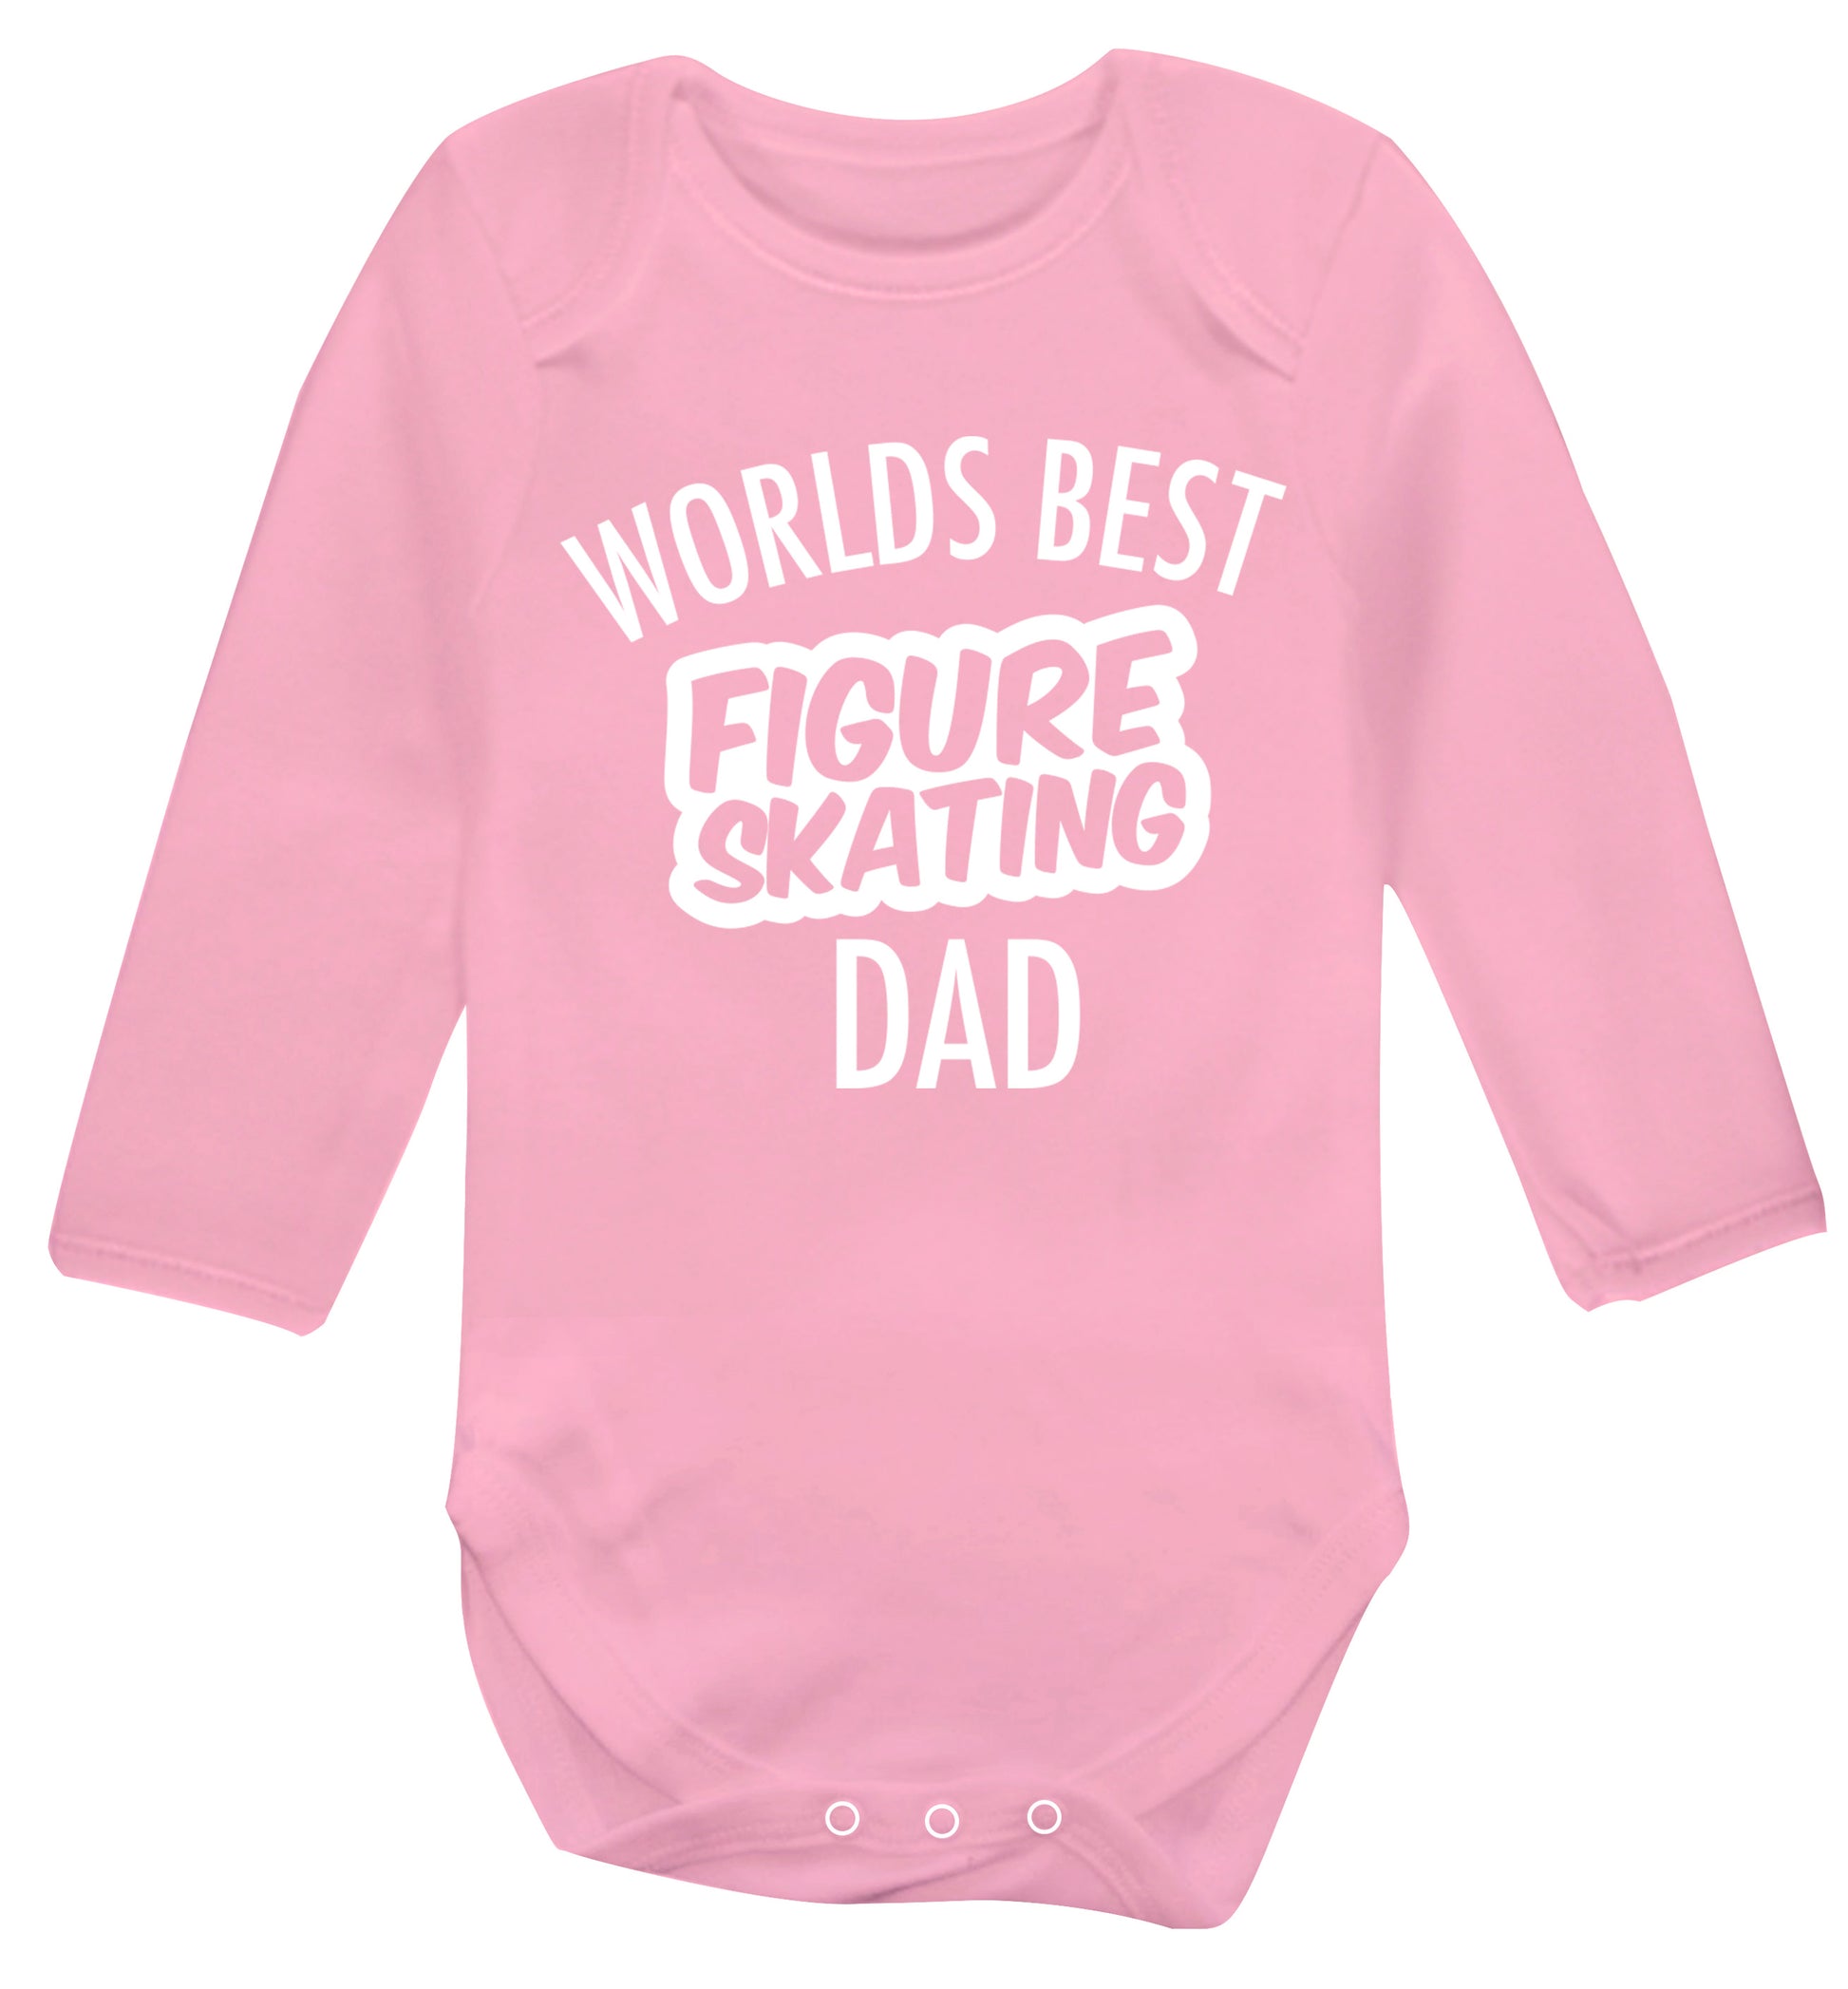 Worlds best figure skating dad Baby Vest long sleeved pale pink 6-12 months